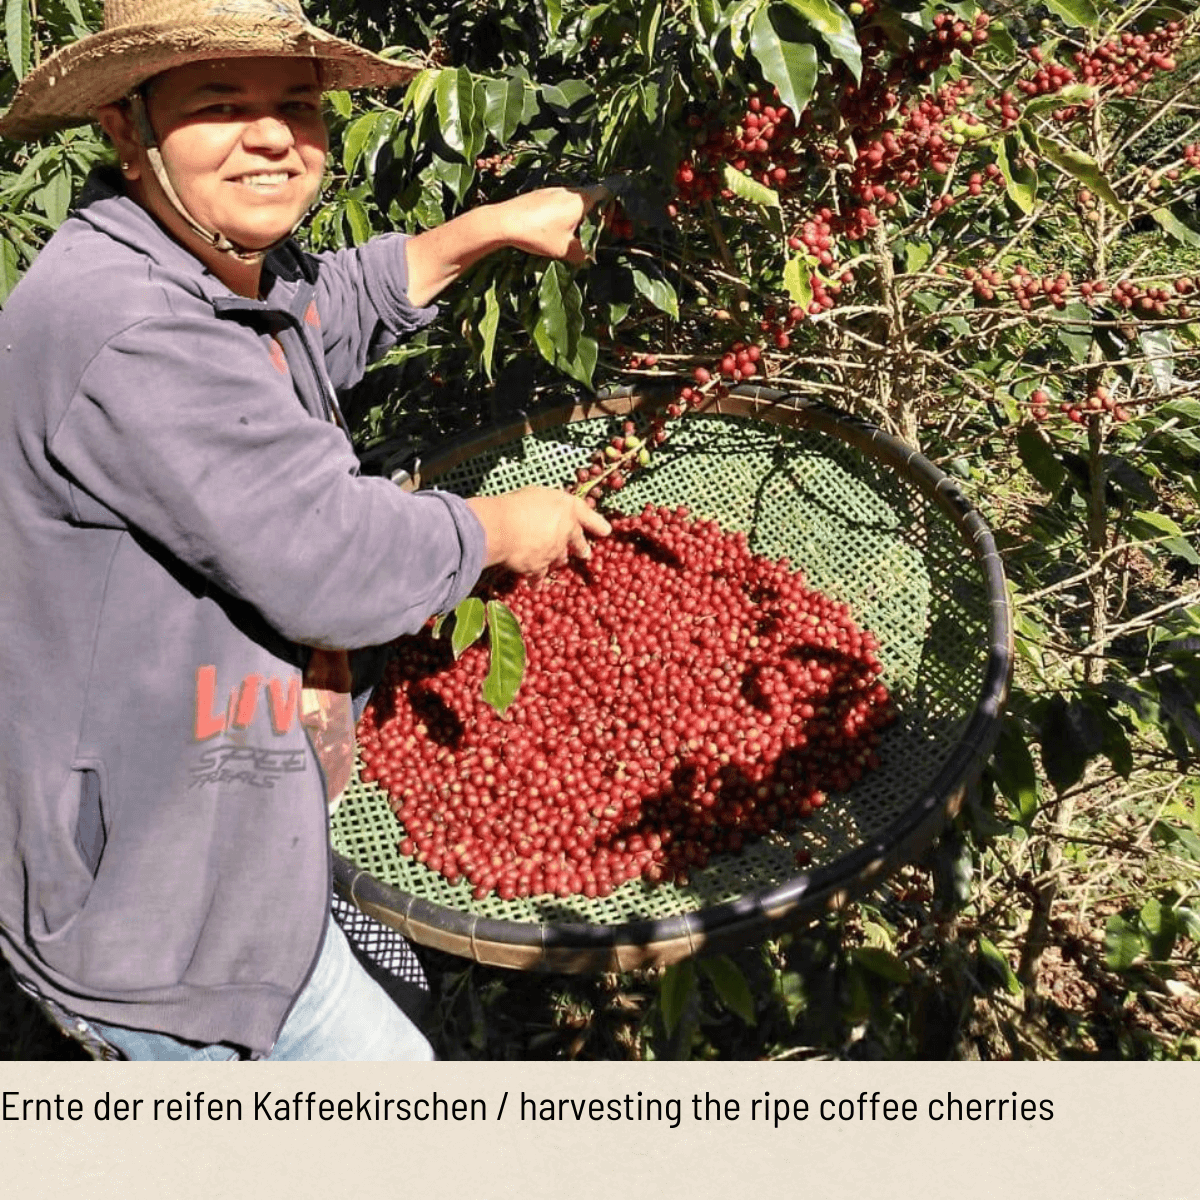 BRASILEÑA Organic Fair Trade Coffee Beans